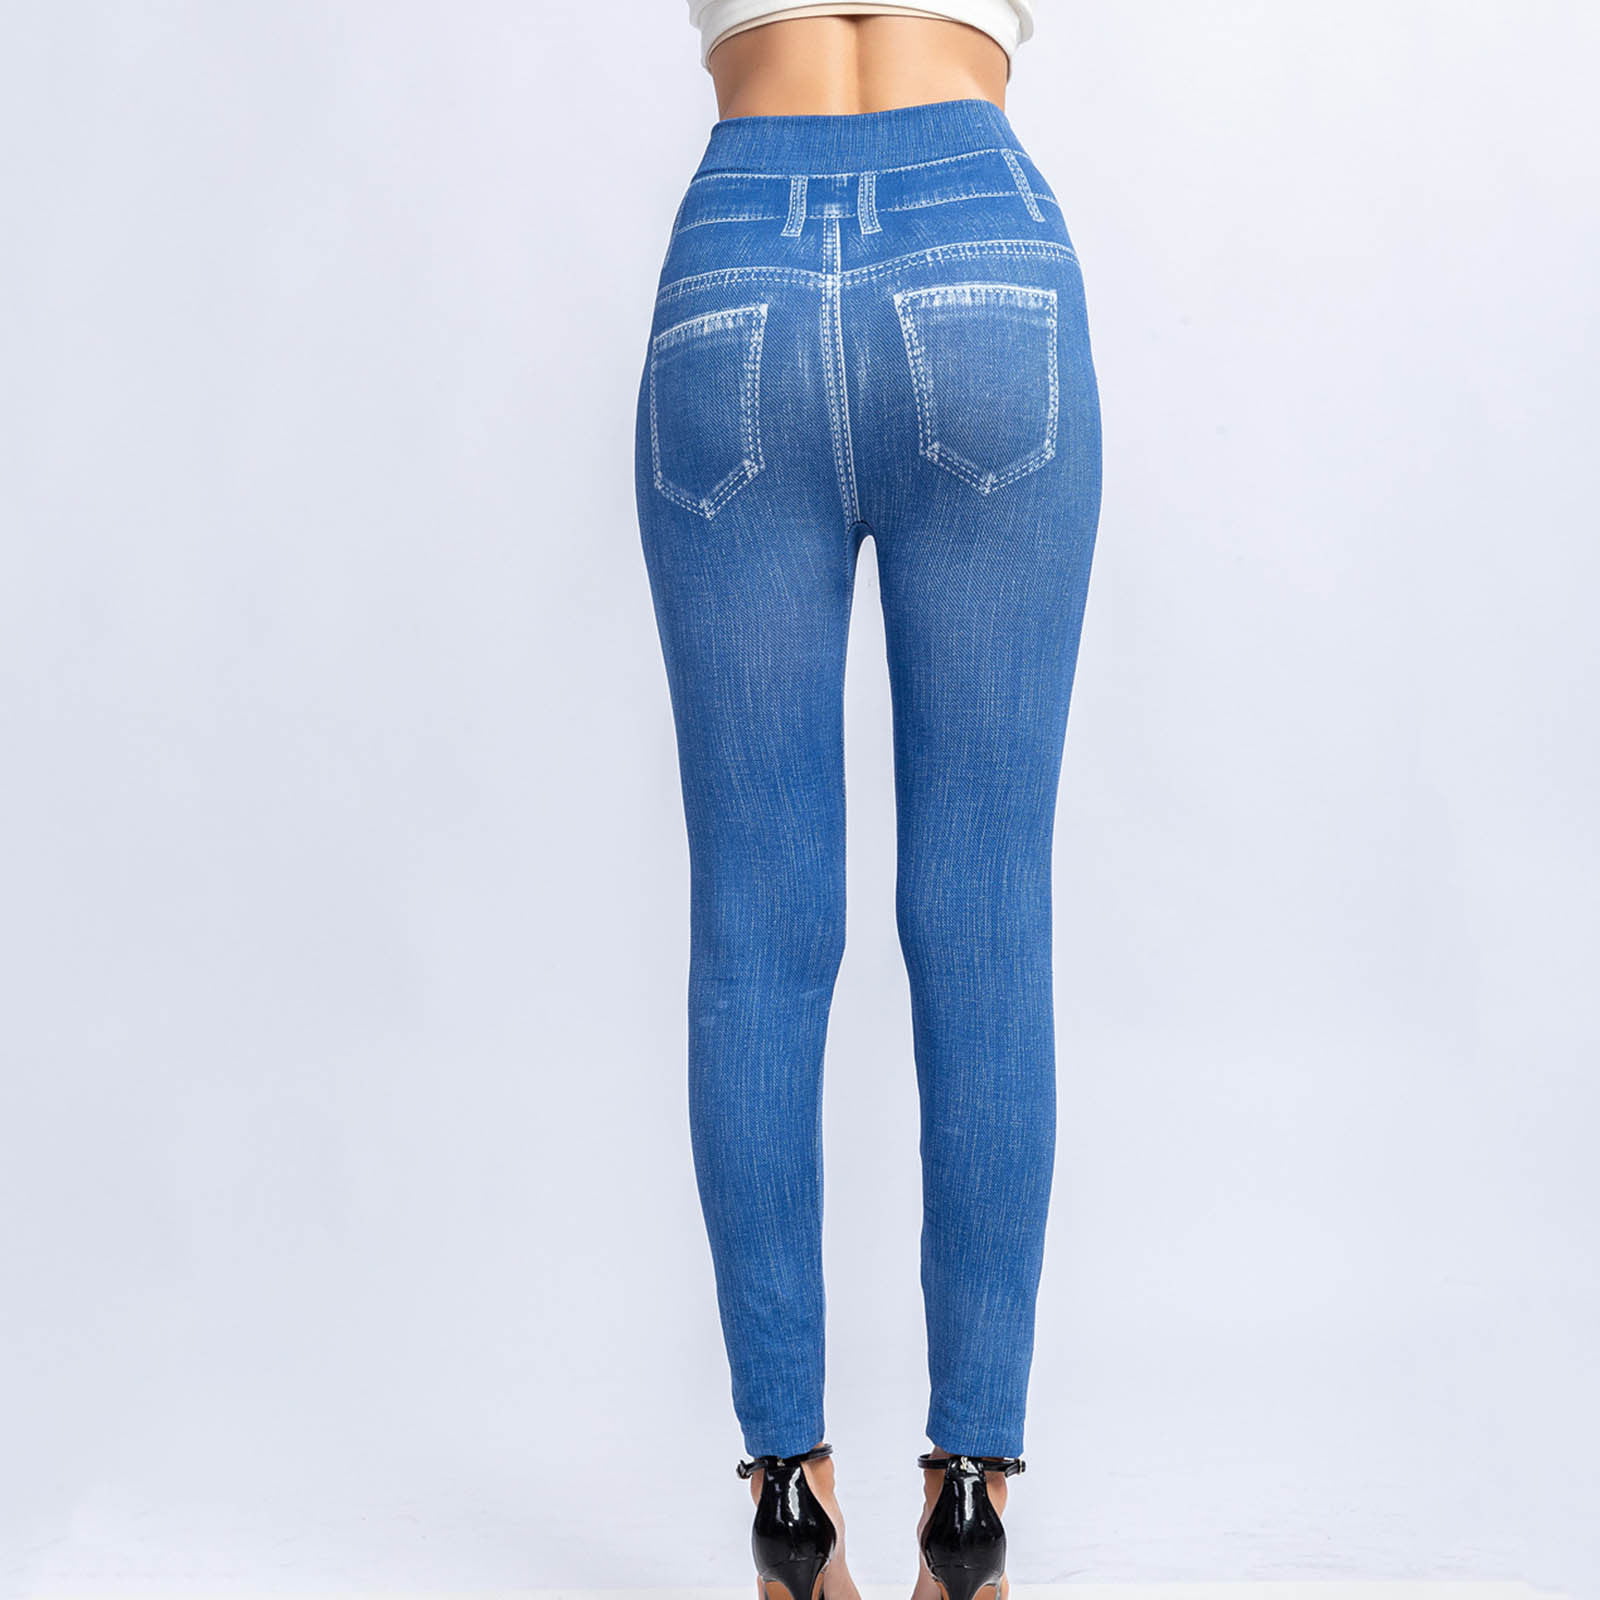 Women's Denim Print Fake Jeans Look Like Leggings Sexy Stretchy High Waist  Slim Skinny Jeggings Tights for Women 